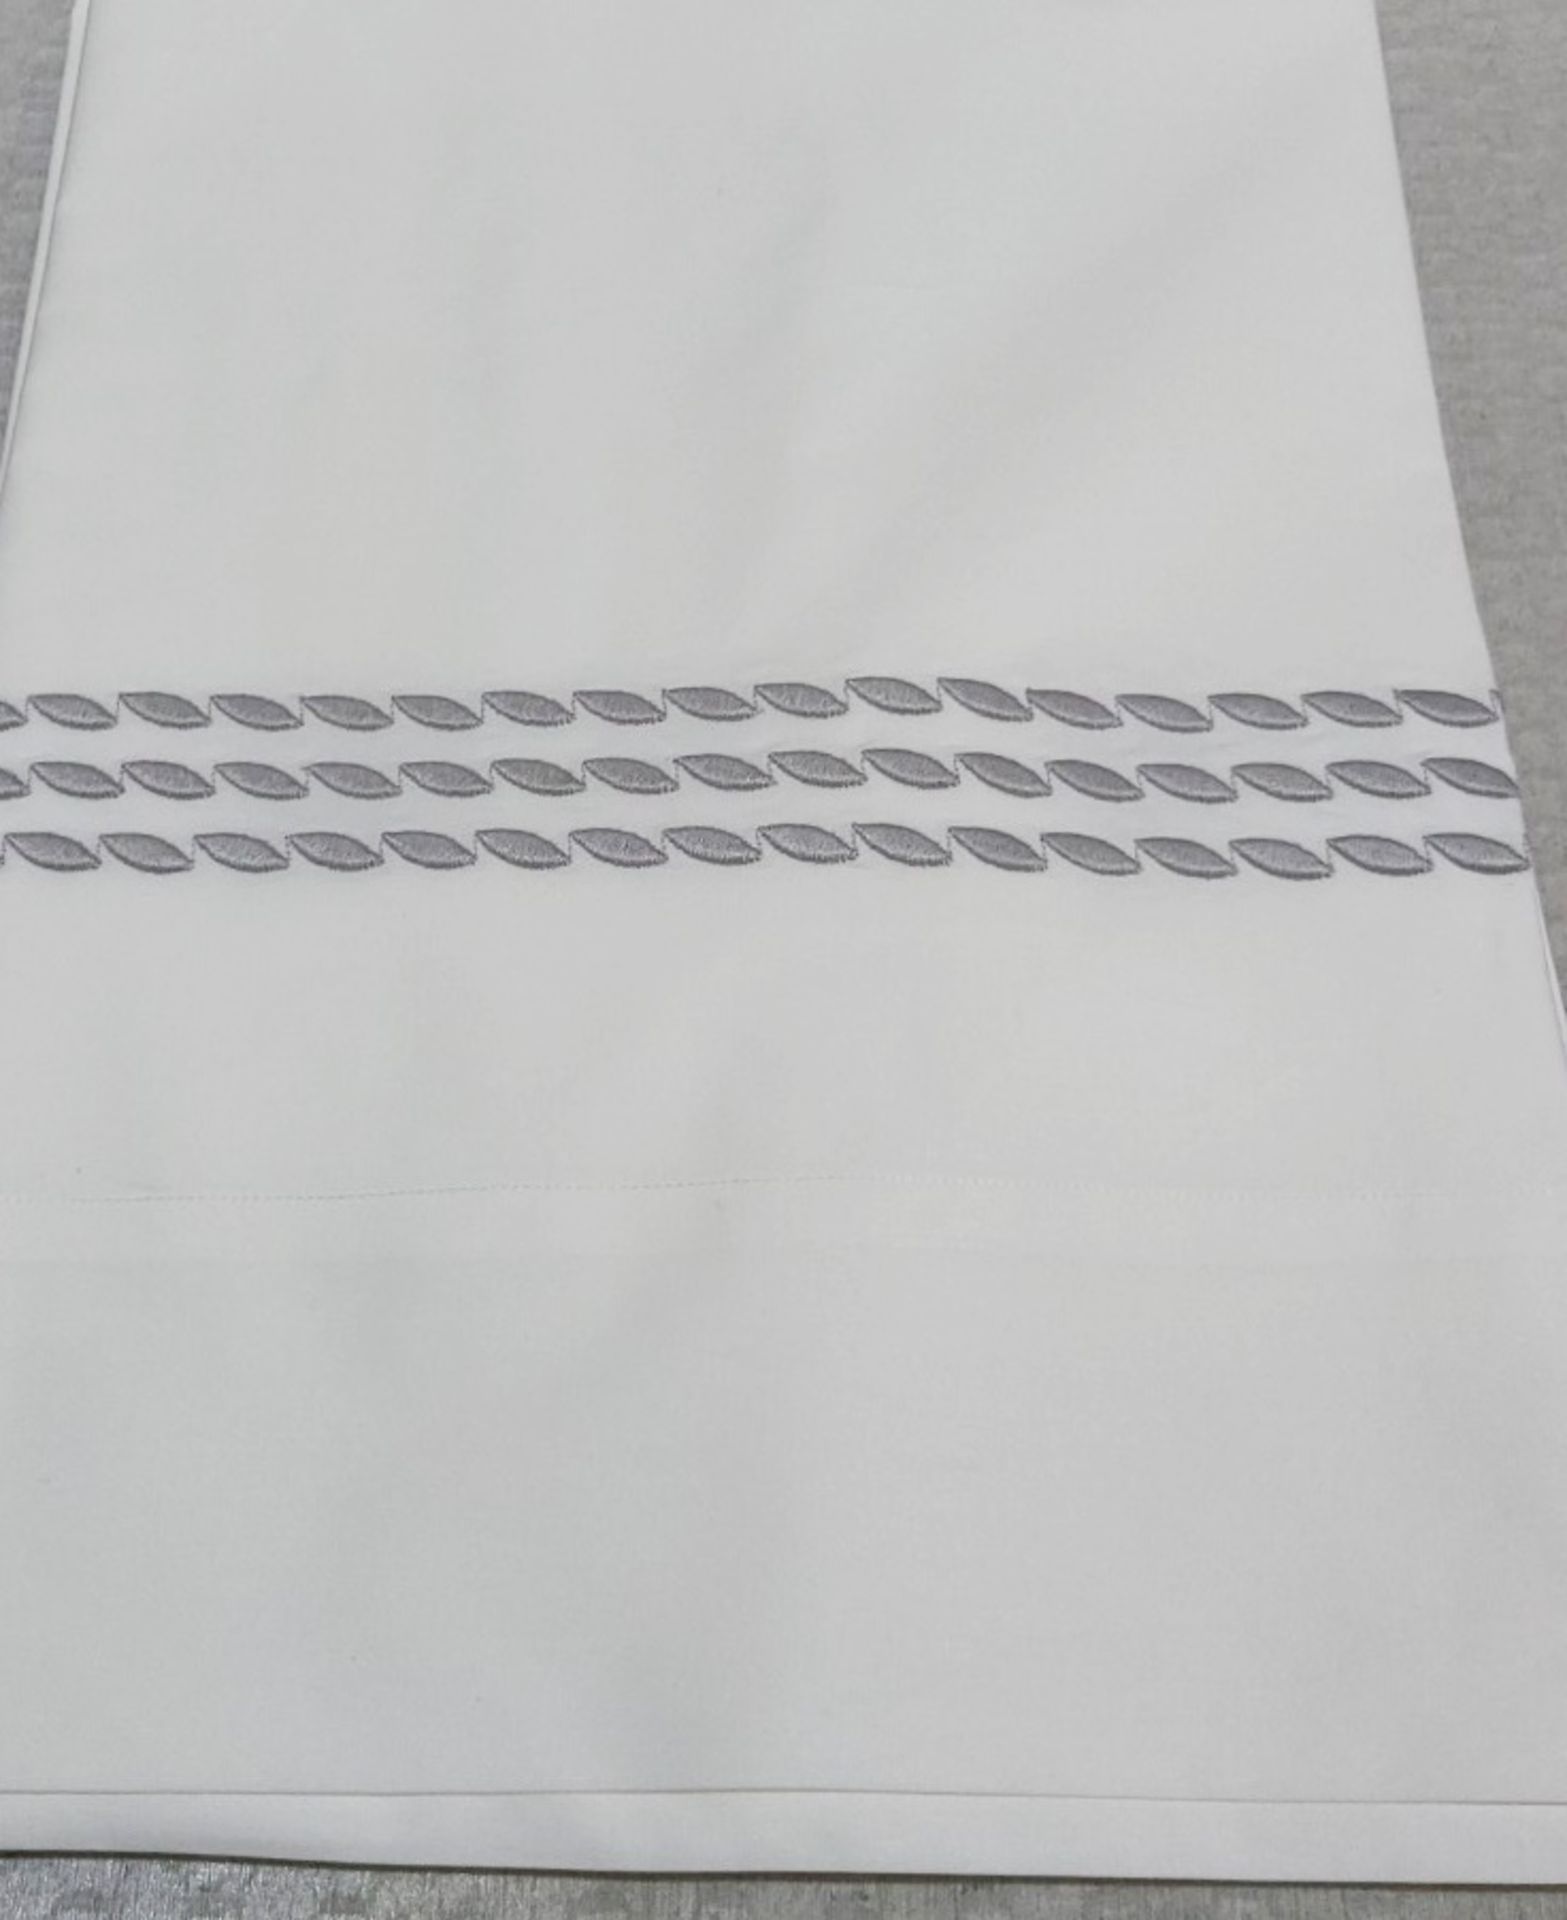 Set of 2 PRATESI Pioggia Grey Embroidery Pillow Shaw 2 50x75cm- Original Price £570.00 - Image 4 of 6